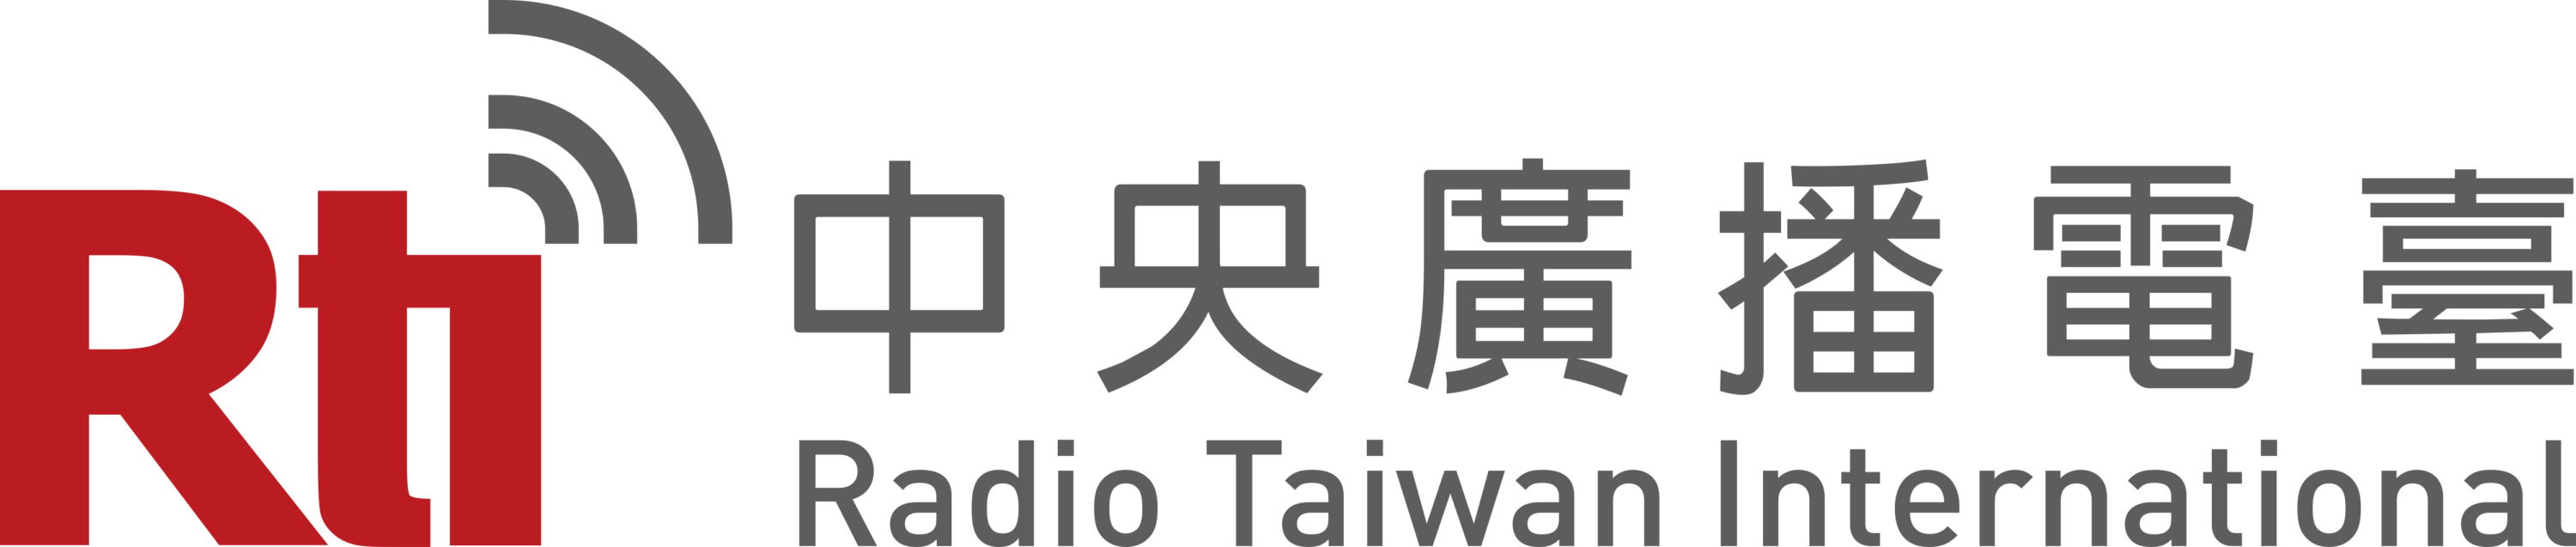 Radio Taiwan International Logo